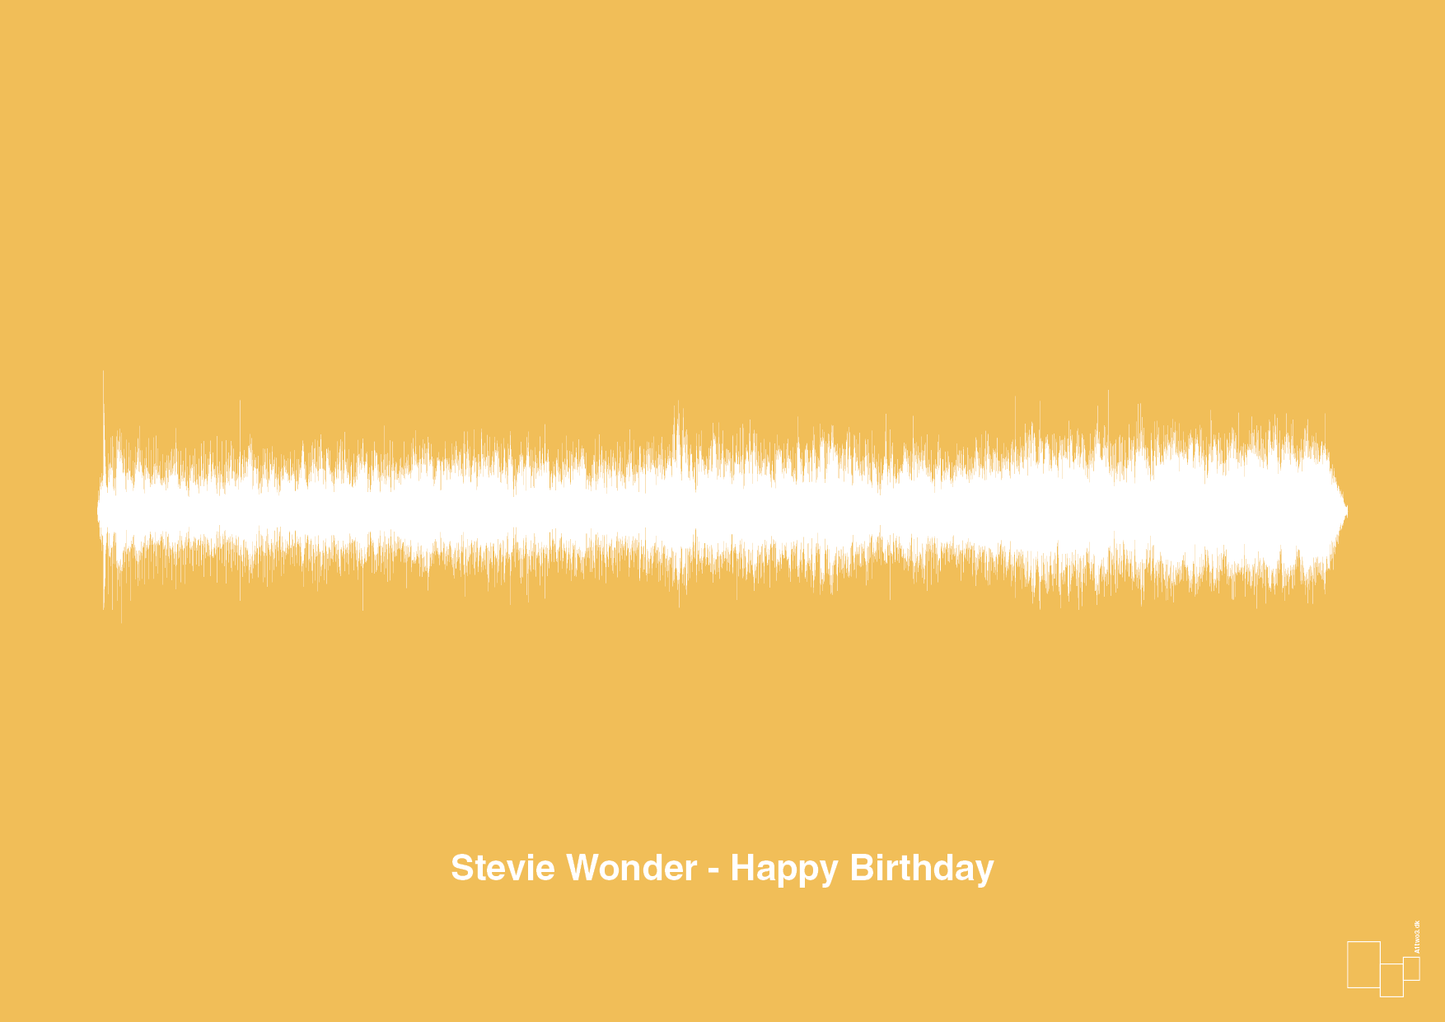 stevie wonder - happy birthday - Plakat med Musik i Honeycomb